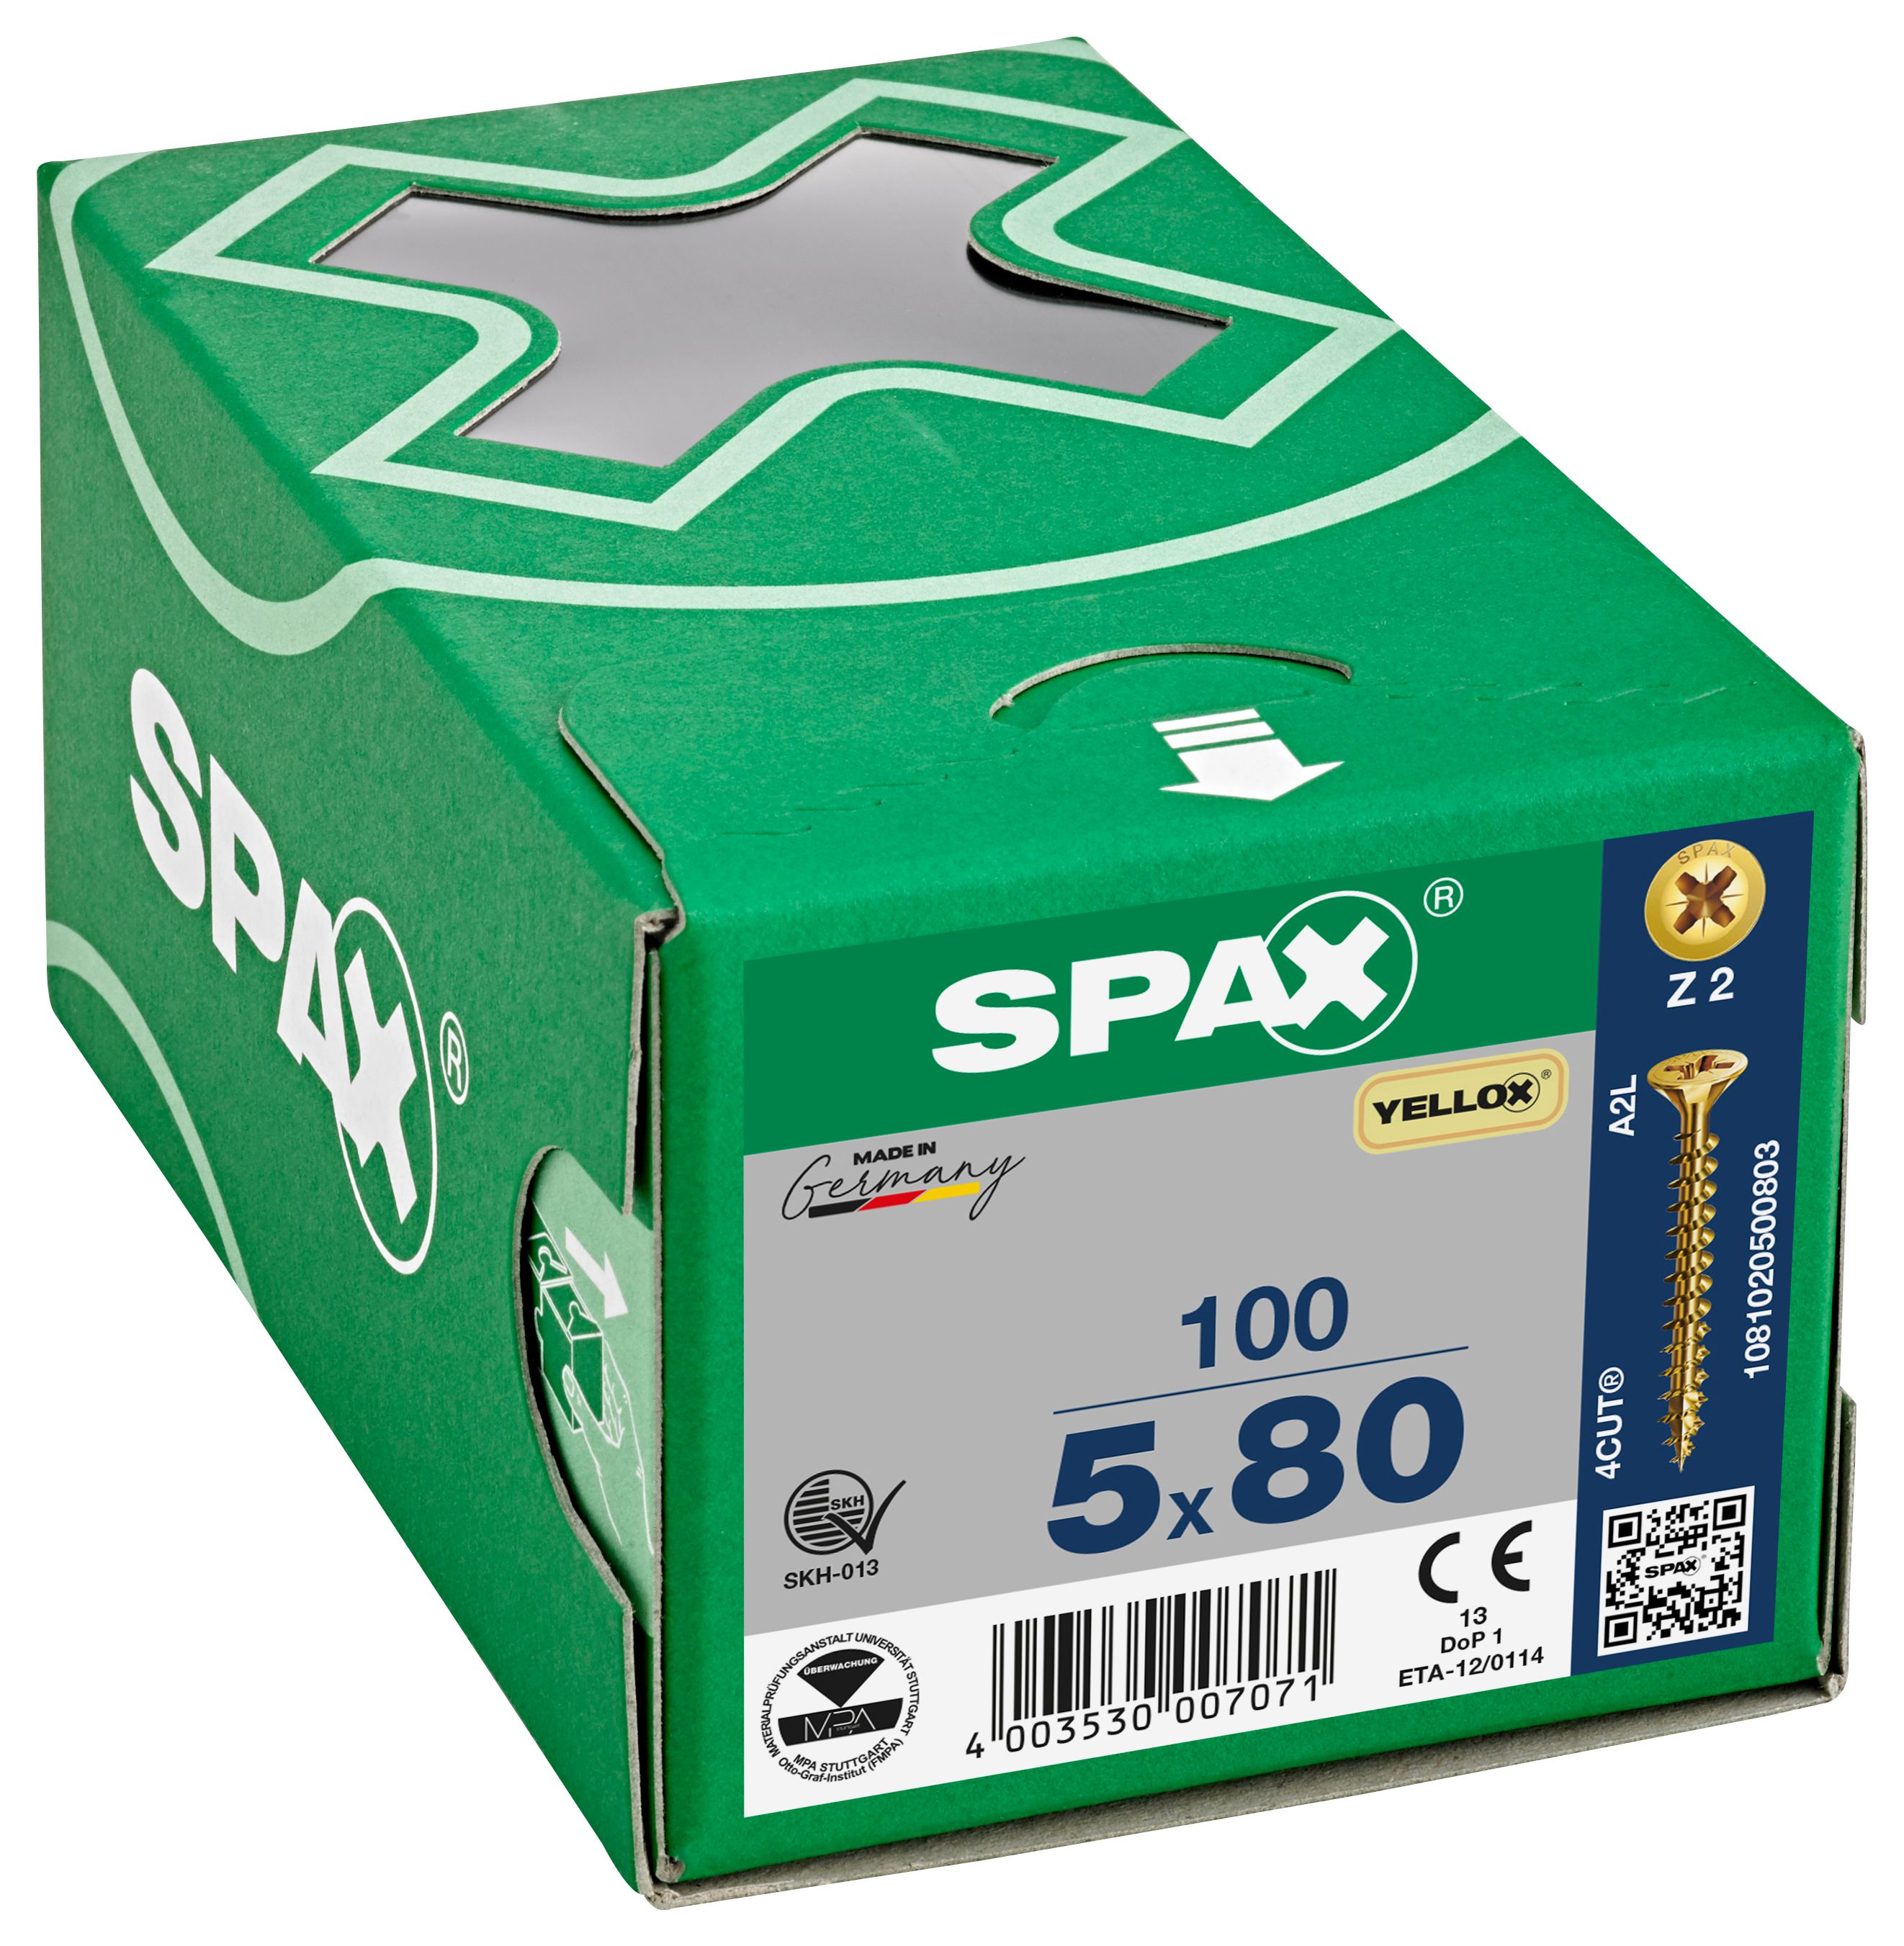 Spax Pz Countersunk Yellox Screws - 5x80mm Pack Of 100